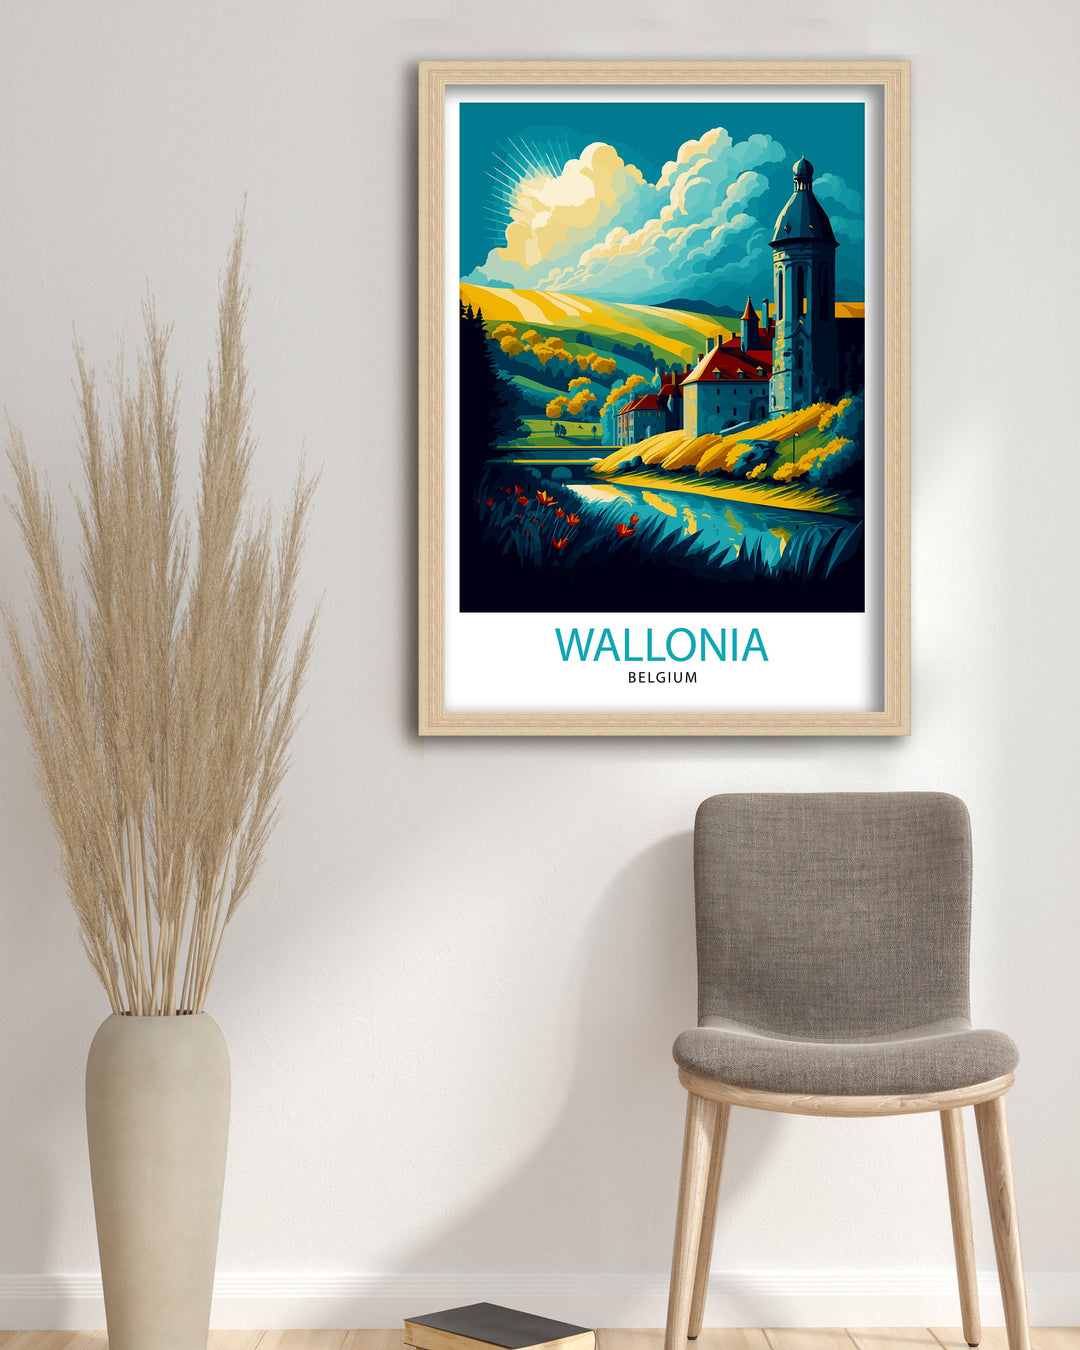 Wallonia Travel Poster Wallonia Wall Art Wallonia Home Decor Wallonia Belgium Illustration Travel Poster Gift For Wallonia Lovers